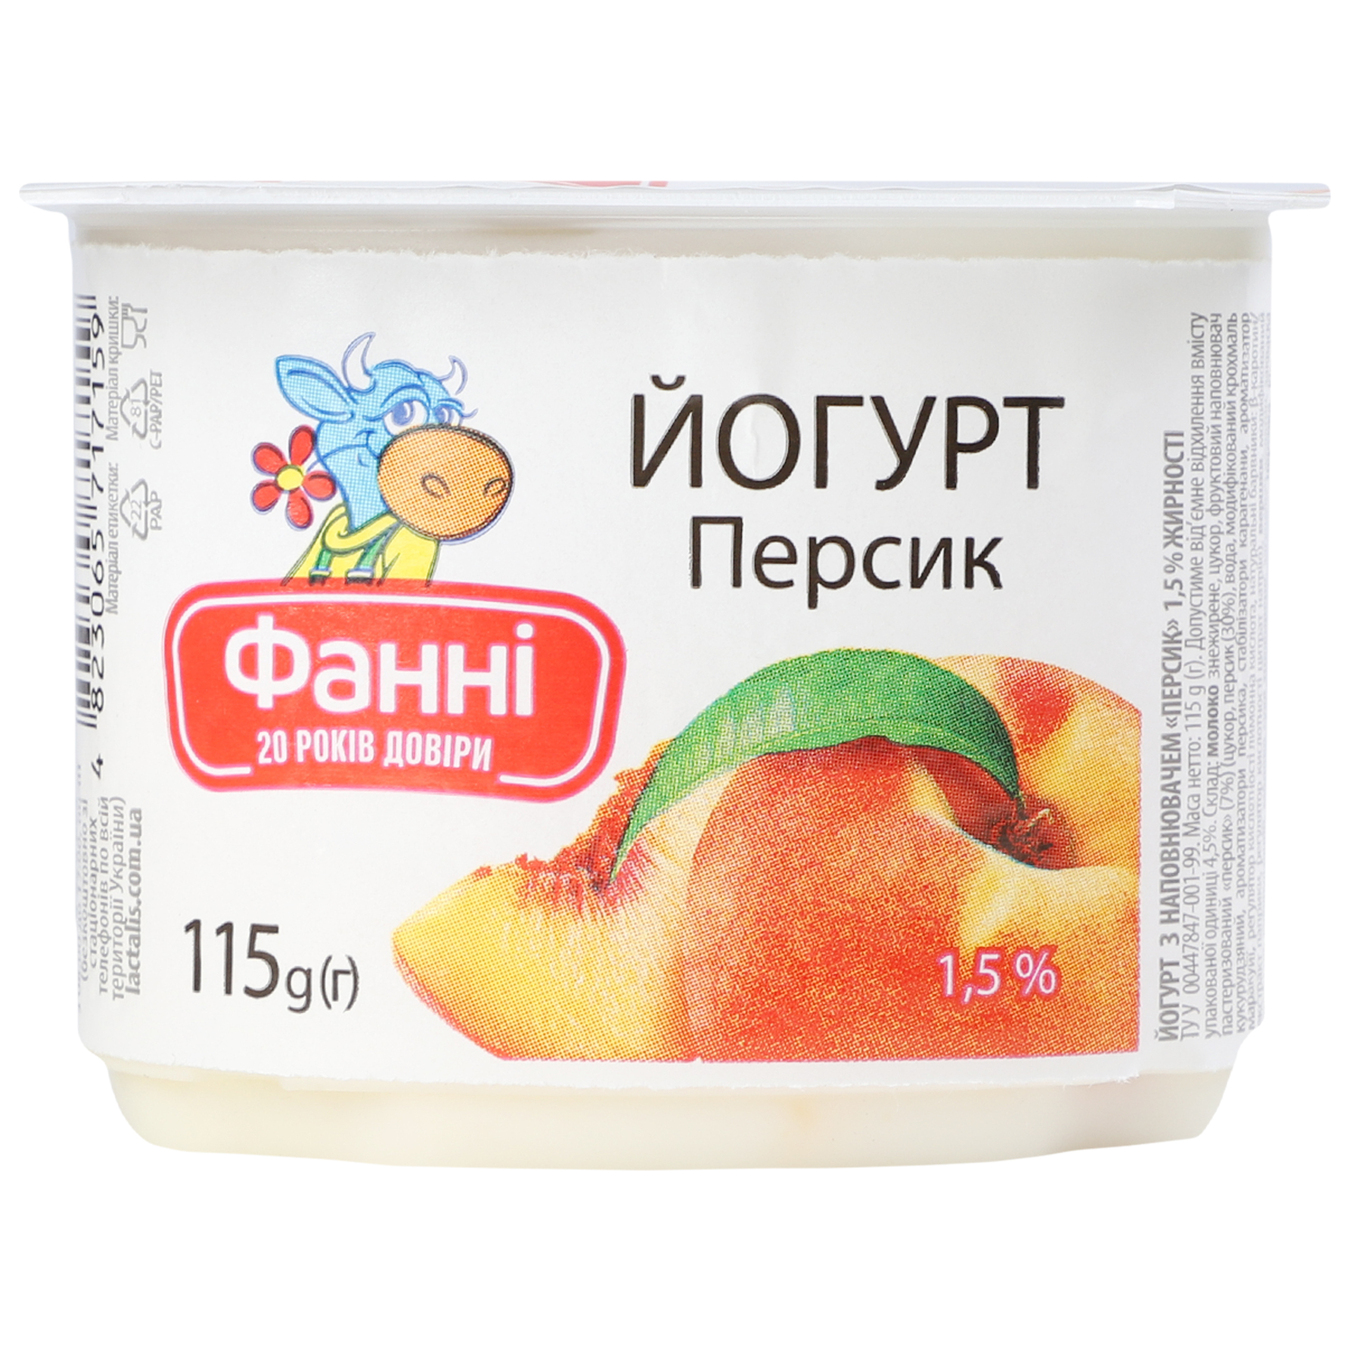 Fanny yogurt with peach filling cup 1.5% 115g